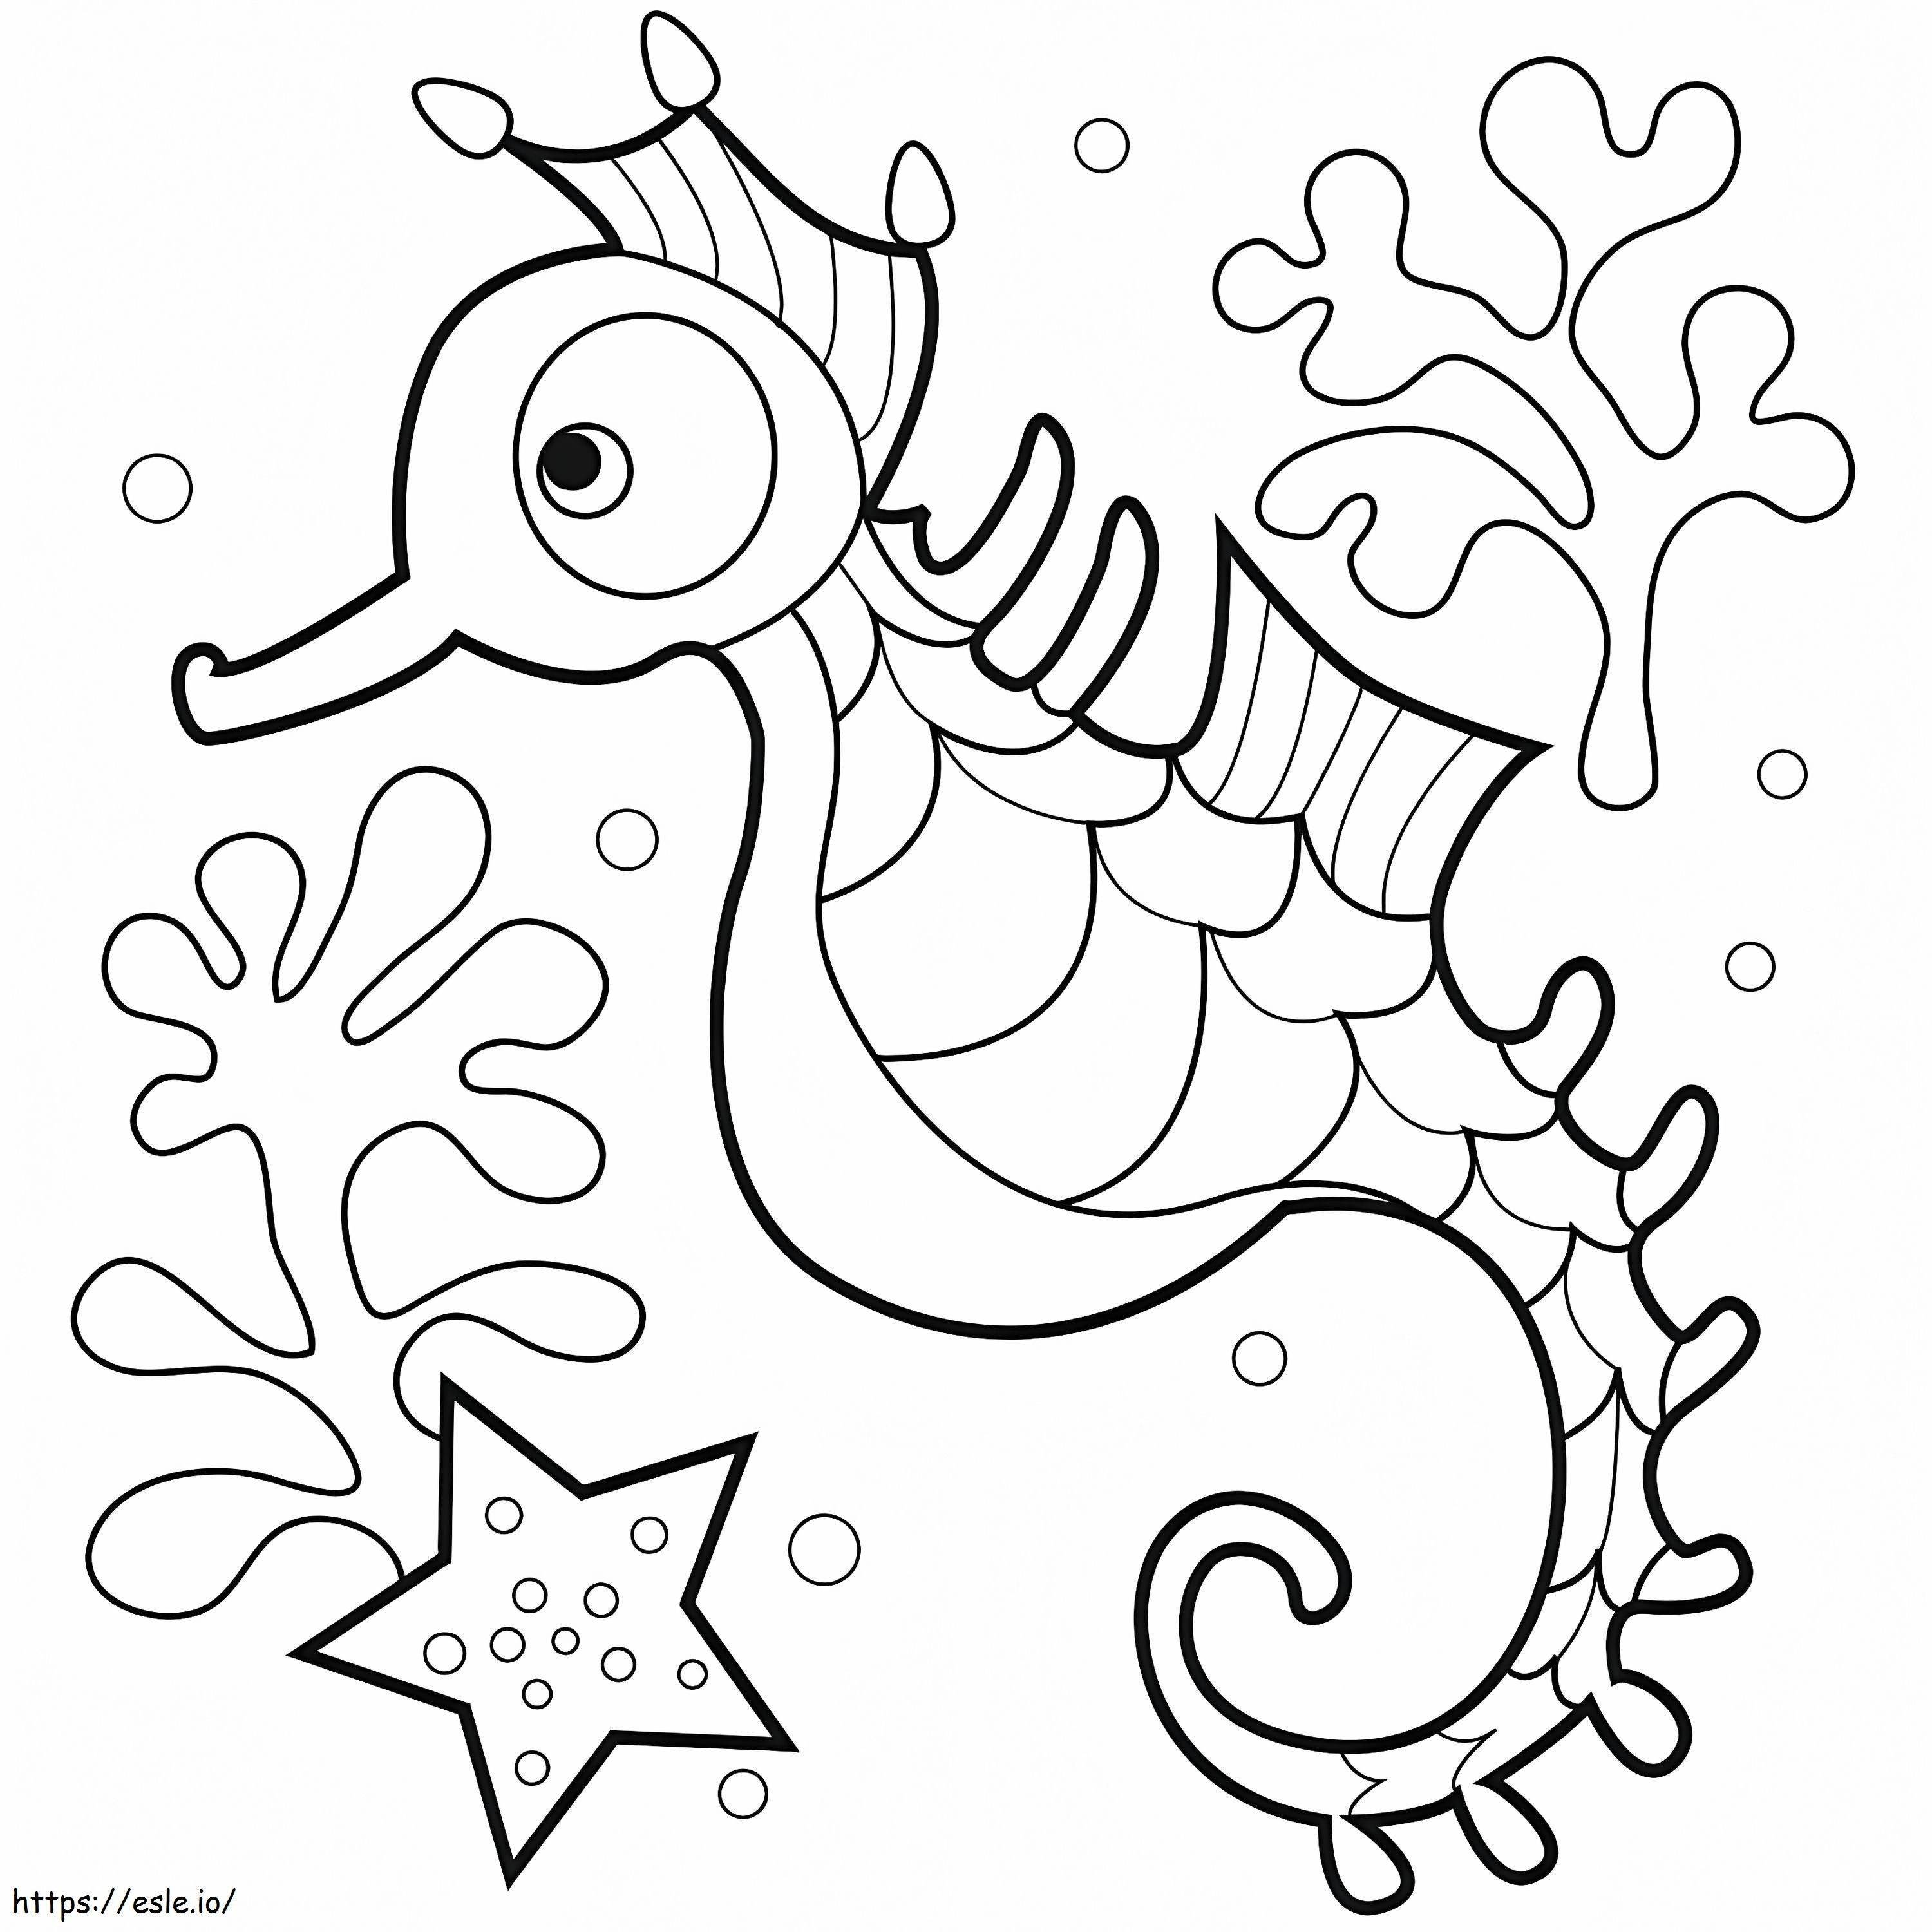 Coloriage Adorable hippocampe à imprimer dessin